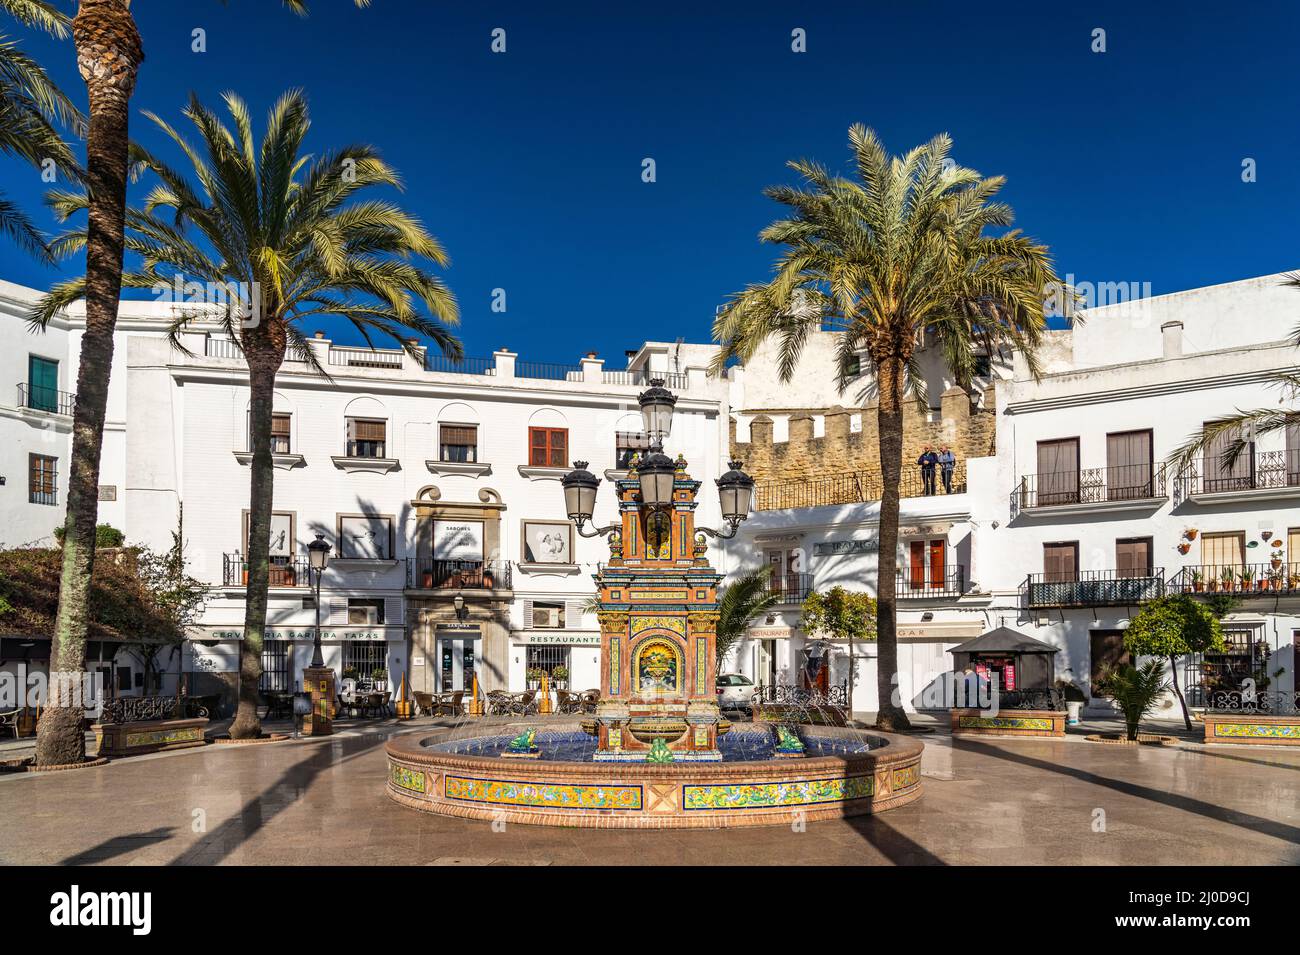 Brunnen und weisse Häuser am Platz Plaza España, Vejer de la Frontera, Andalusien, Spanien  |  Fountain and white houses at Plaza España square, Vejer Stock Photo